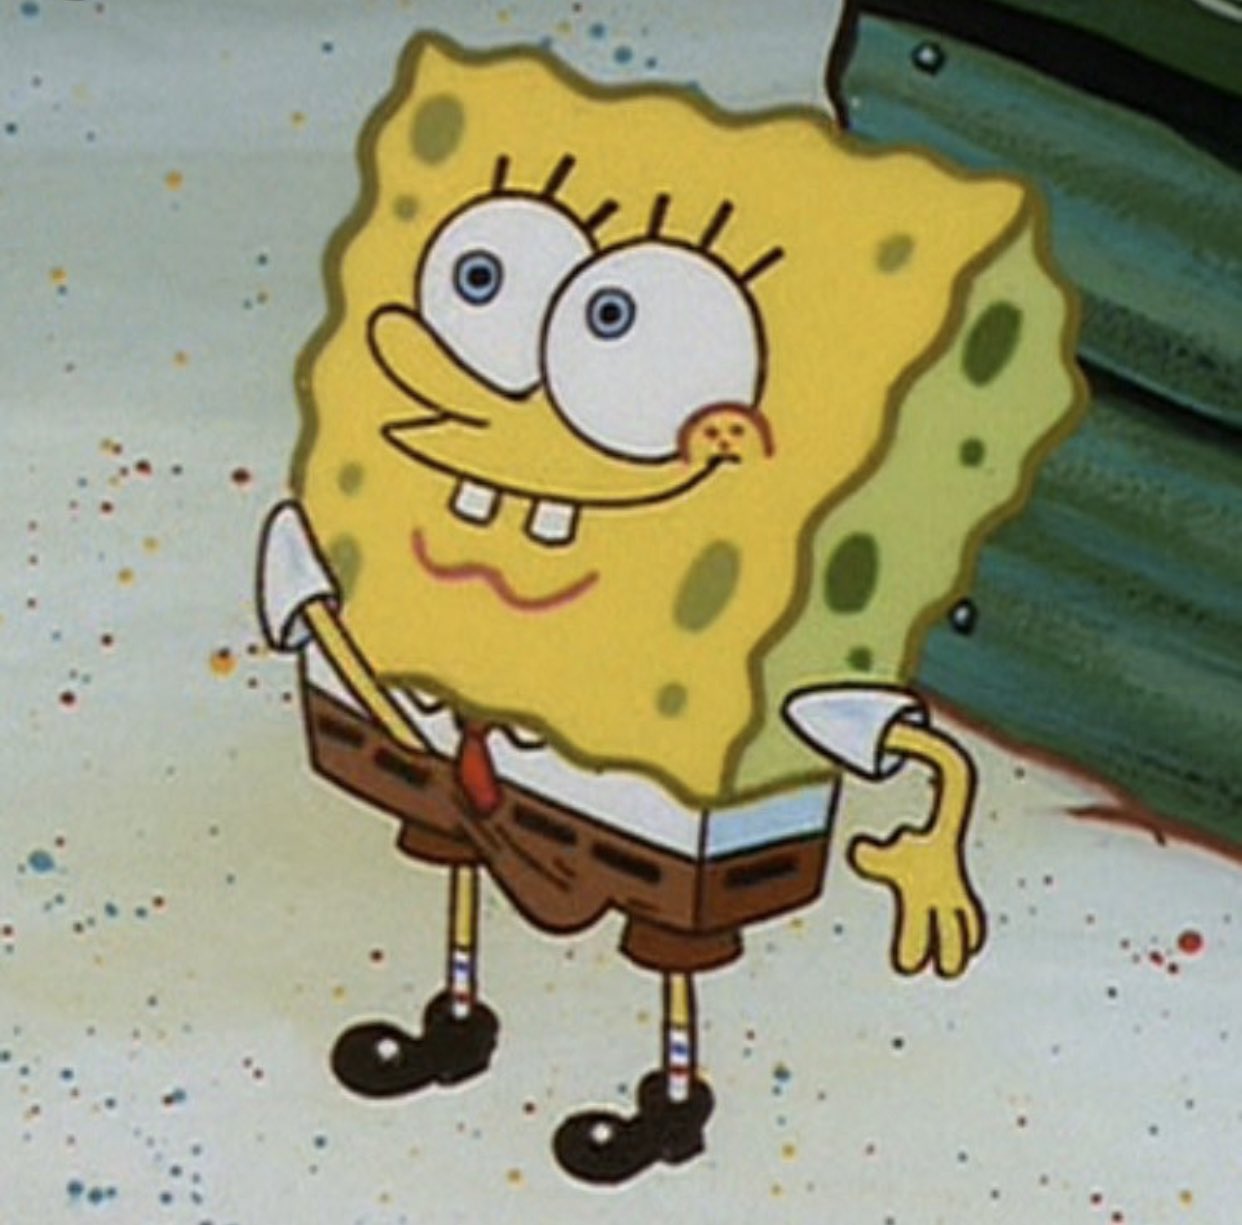 spongebob pants